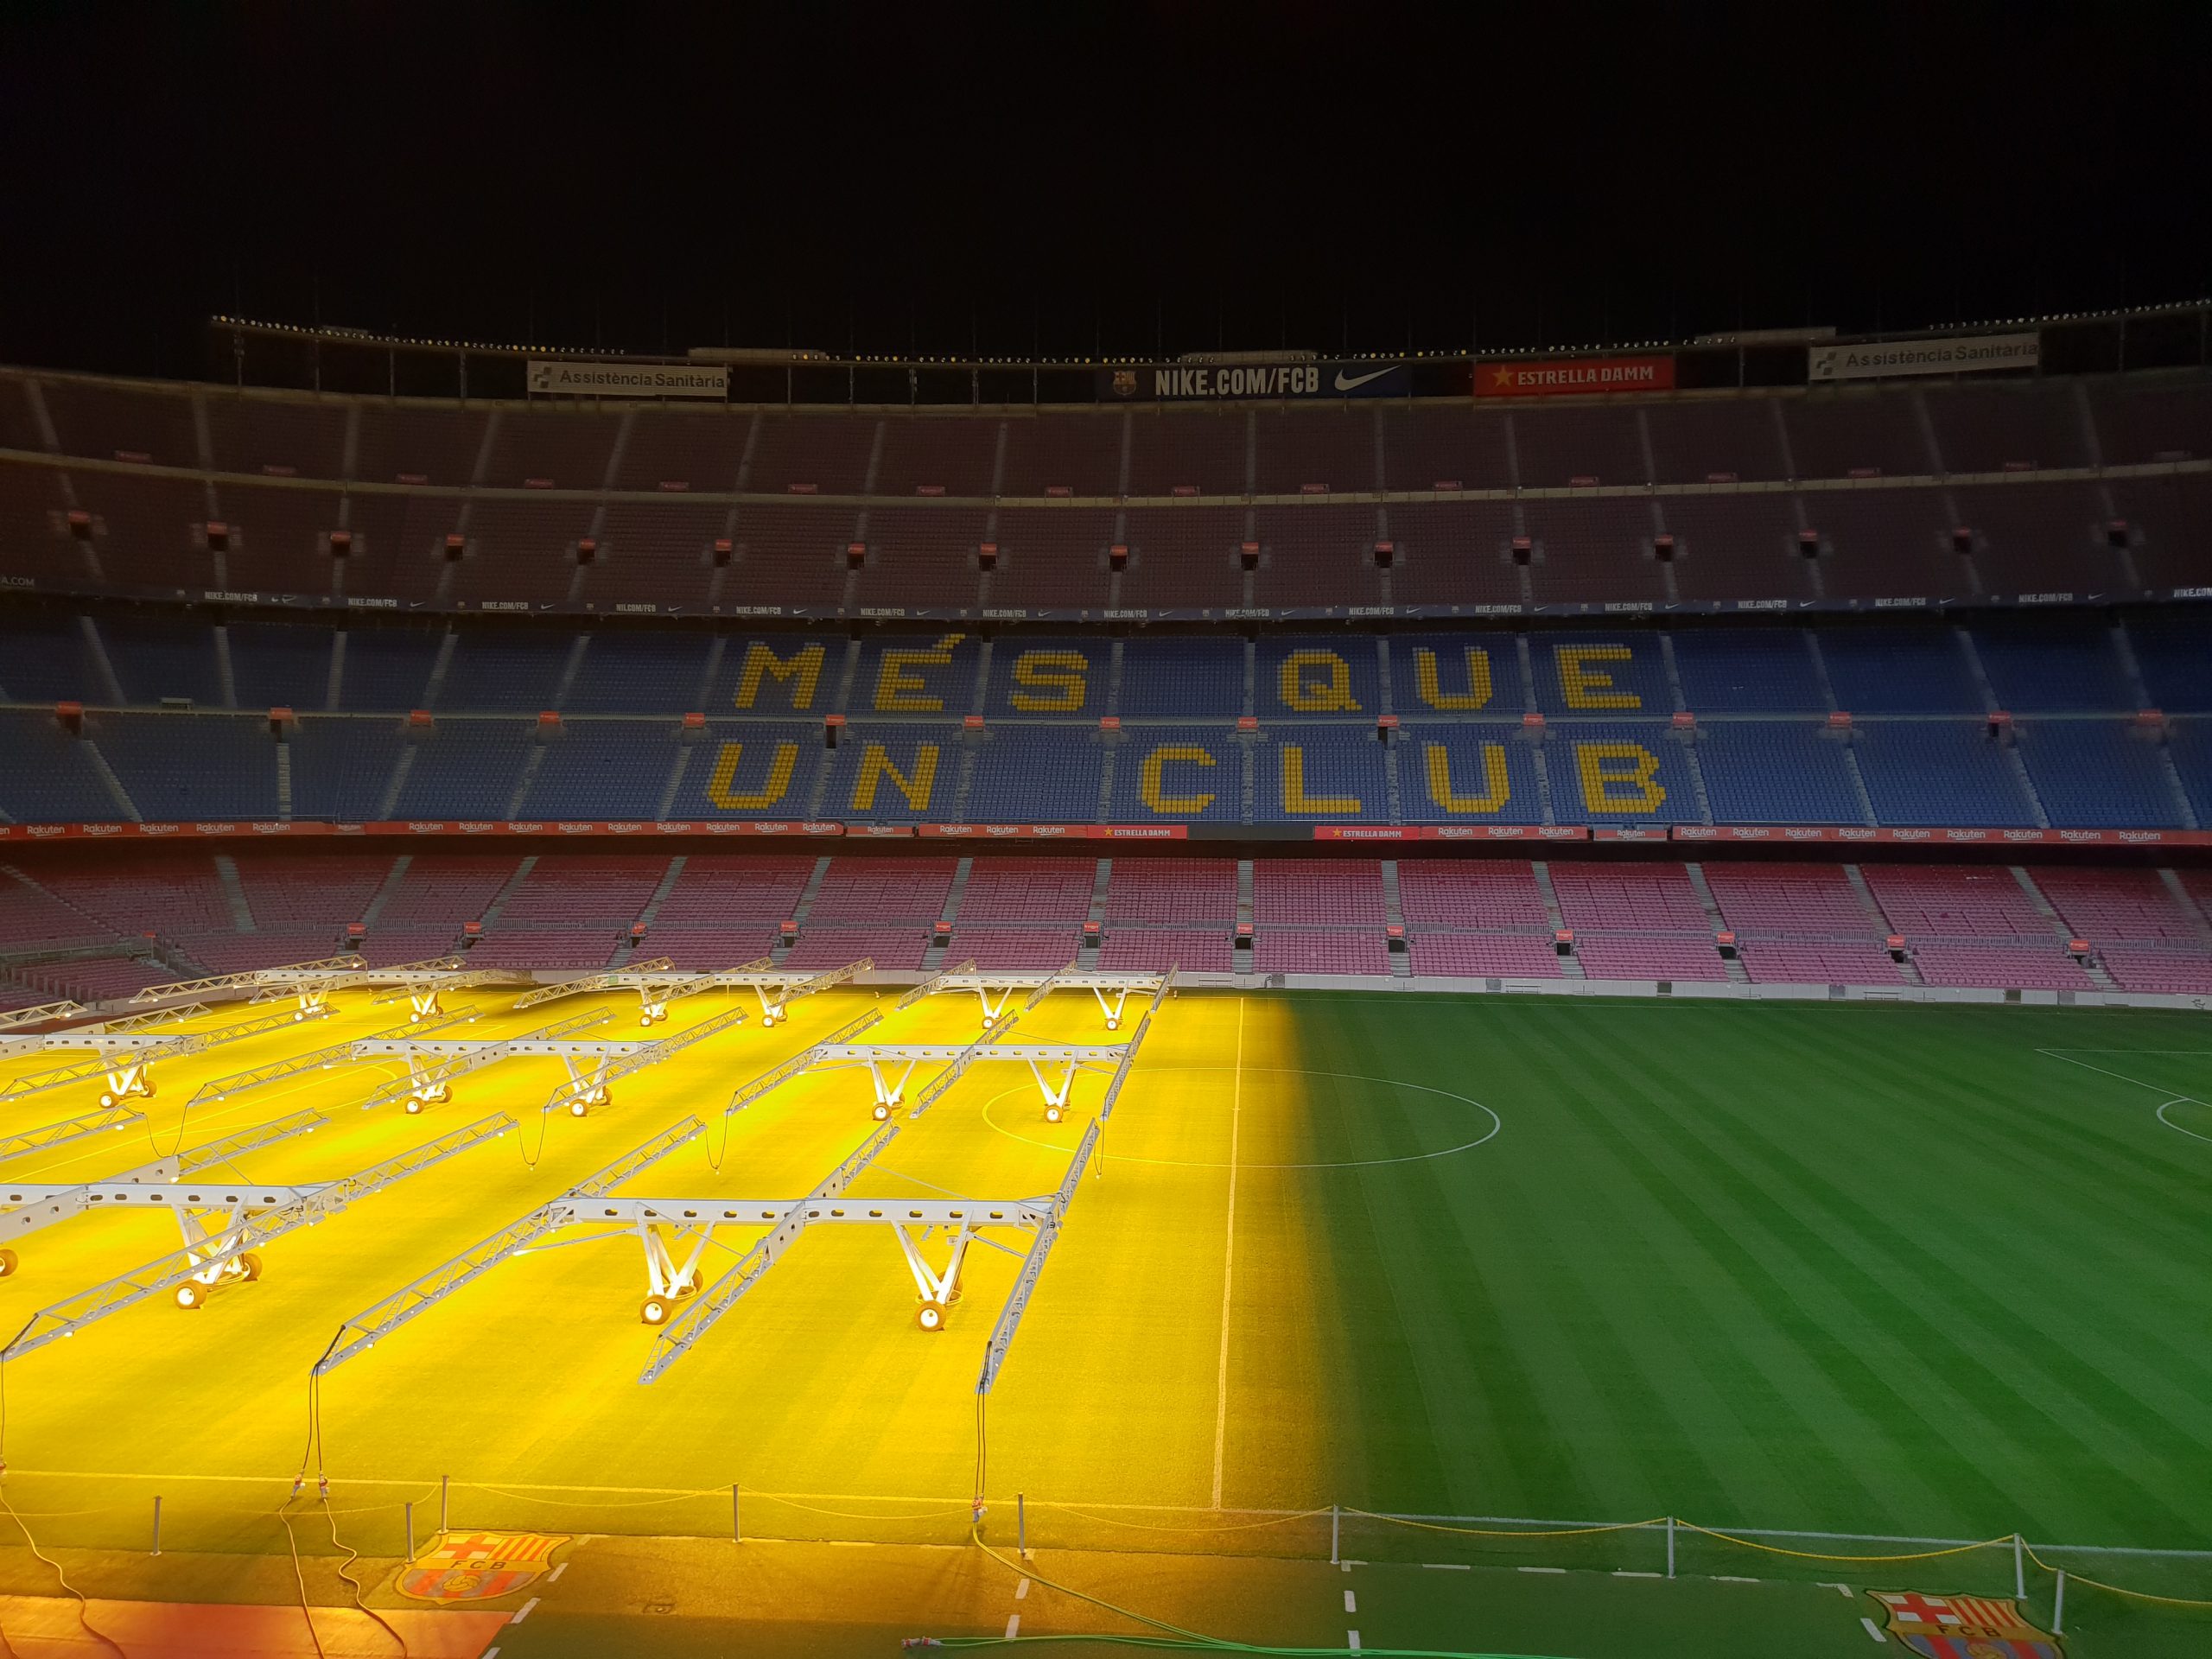 Barcelona Football Coach Analytics Summit - Trip Report